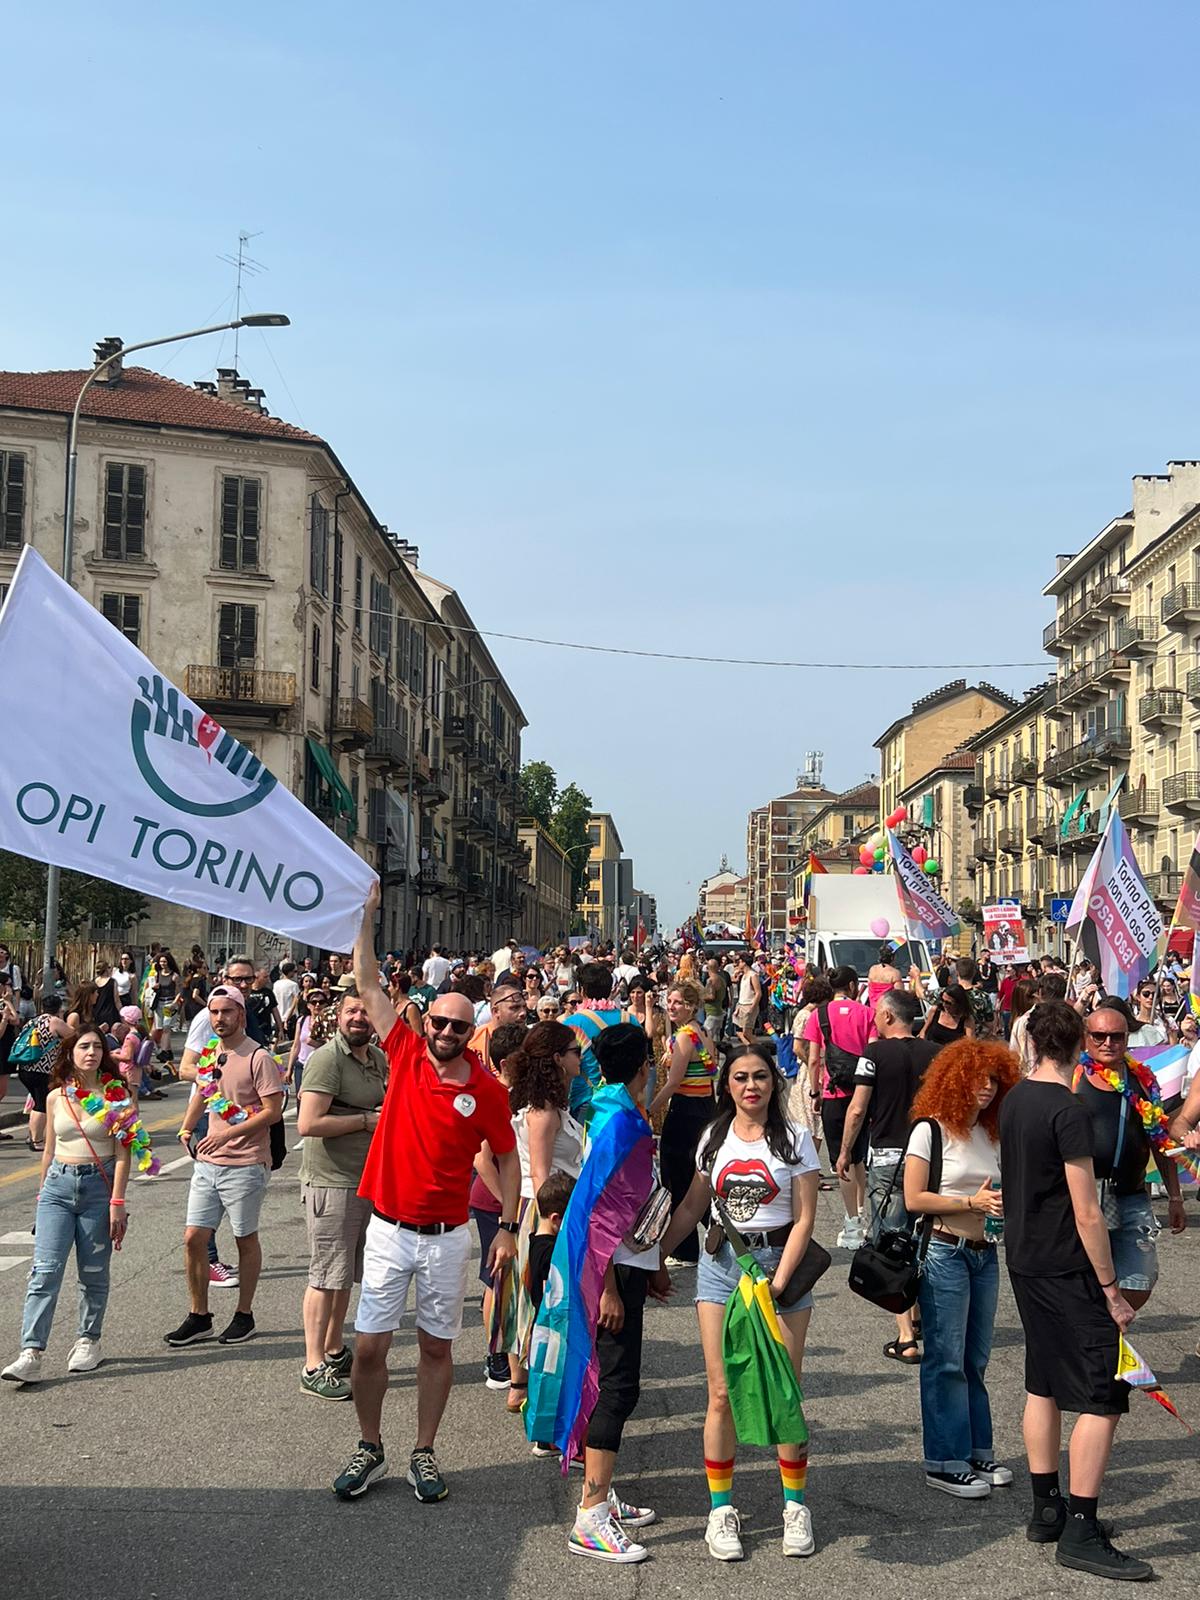 OPi_Torino__Pride.jpeg